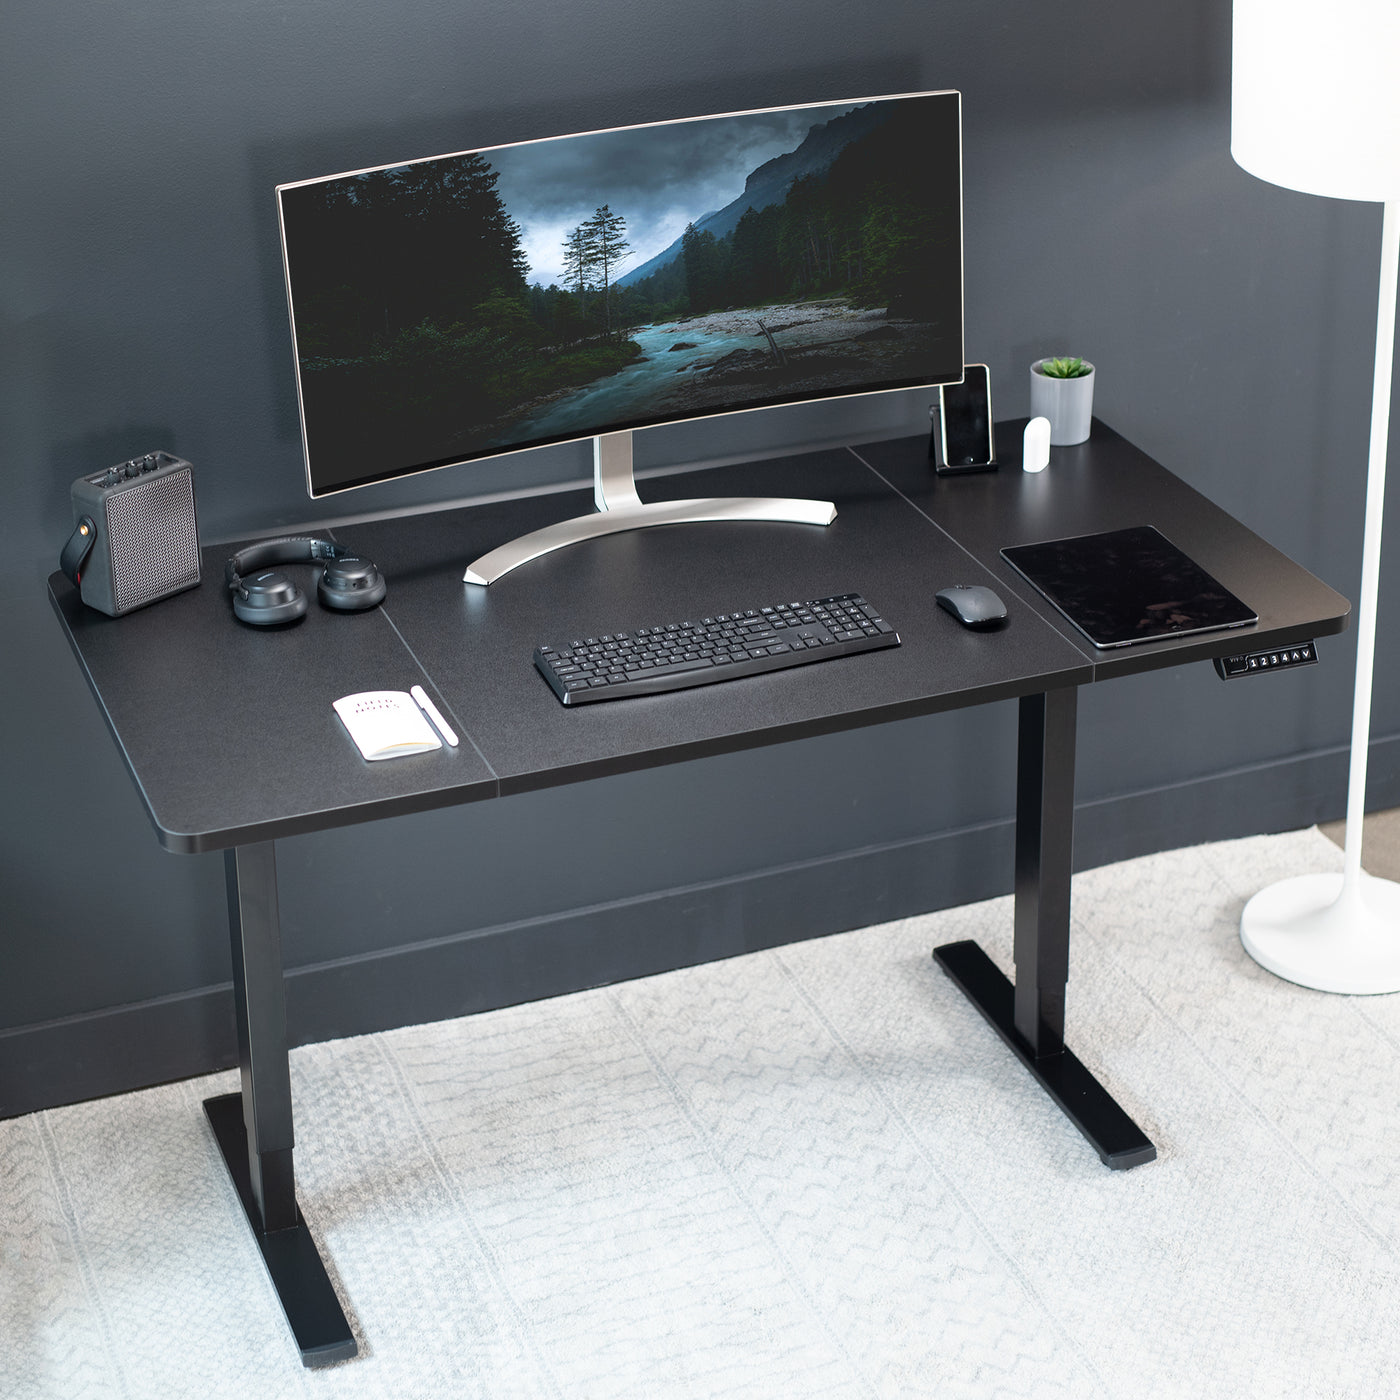 Wide sturdy desk tabletop for office workstation.